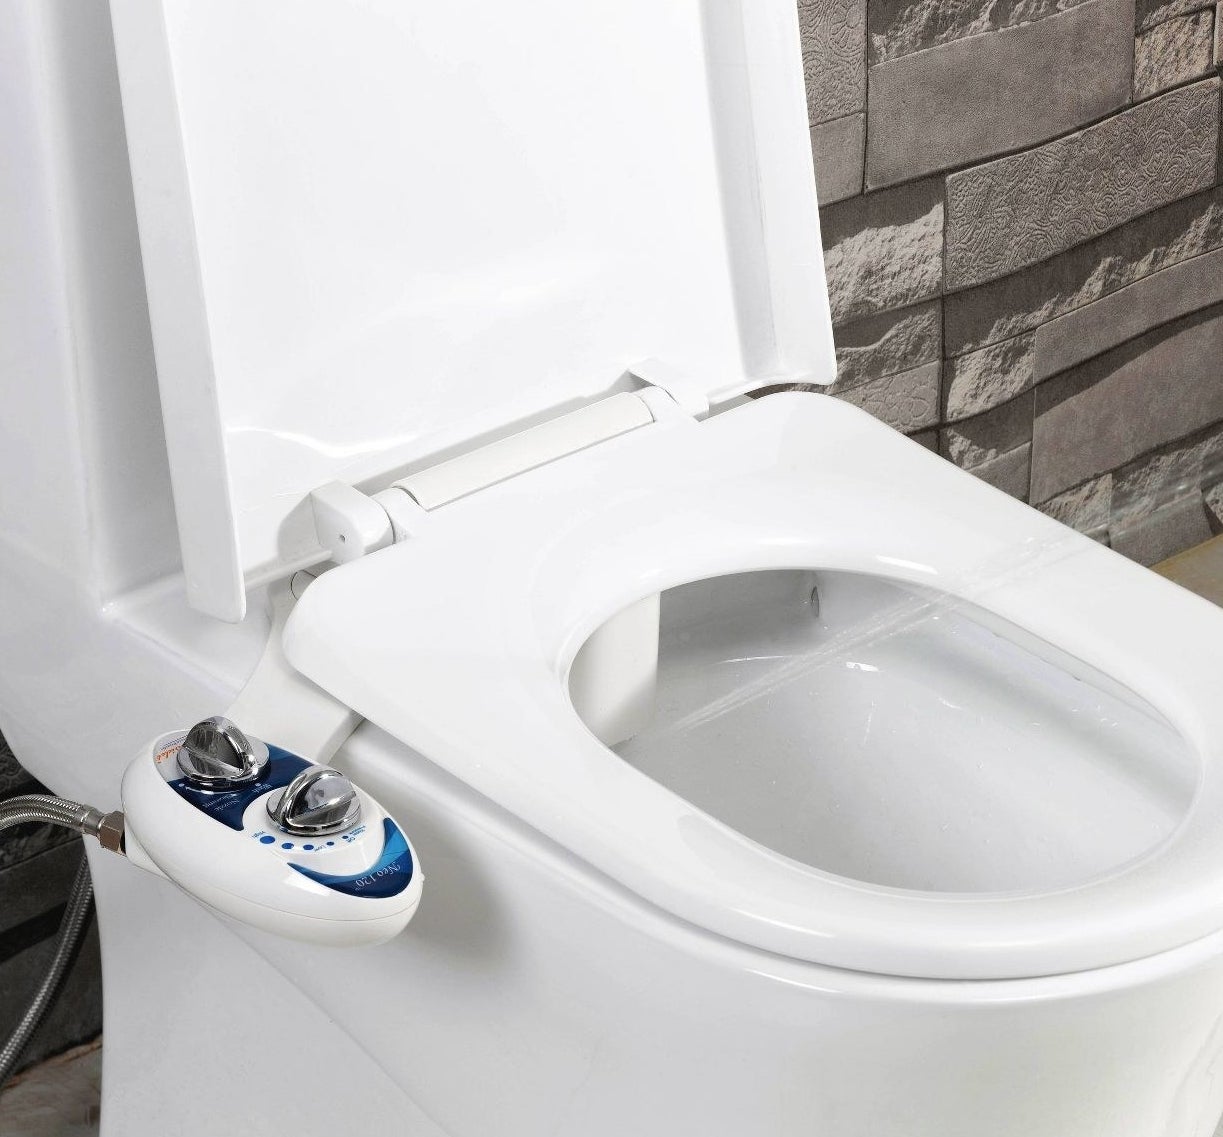 bidet attached a toilet